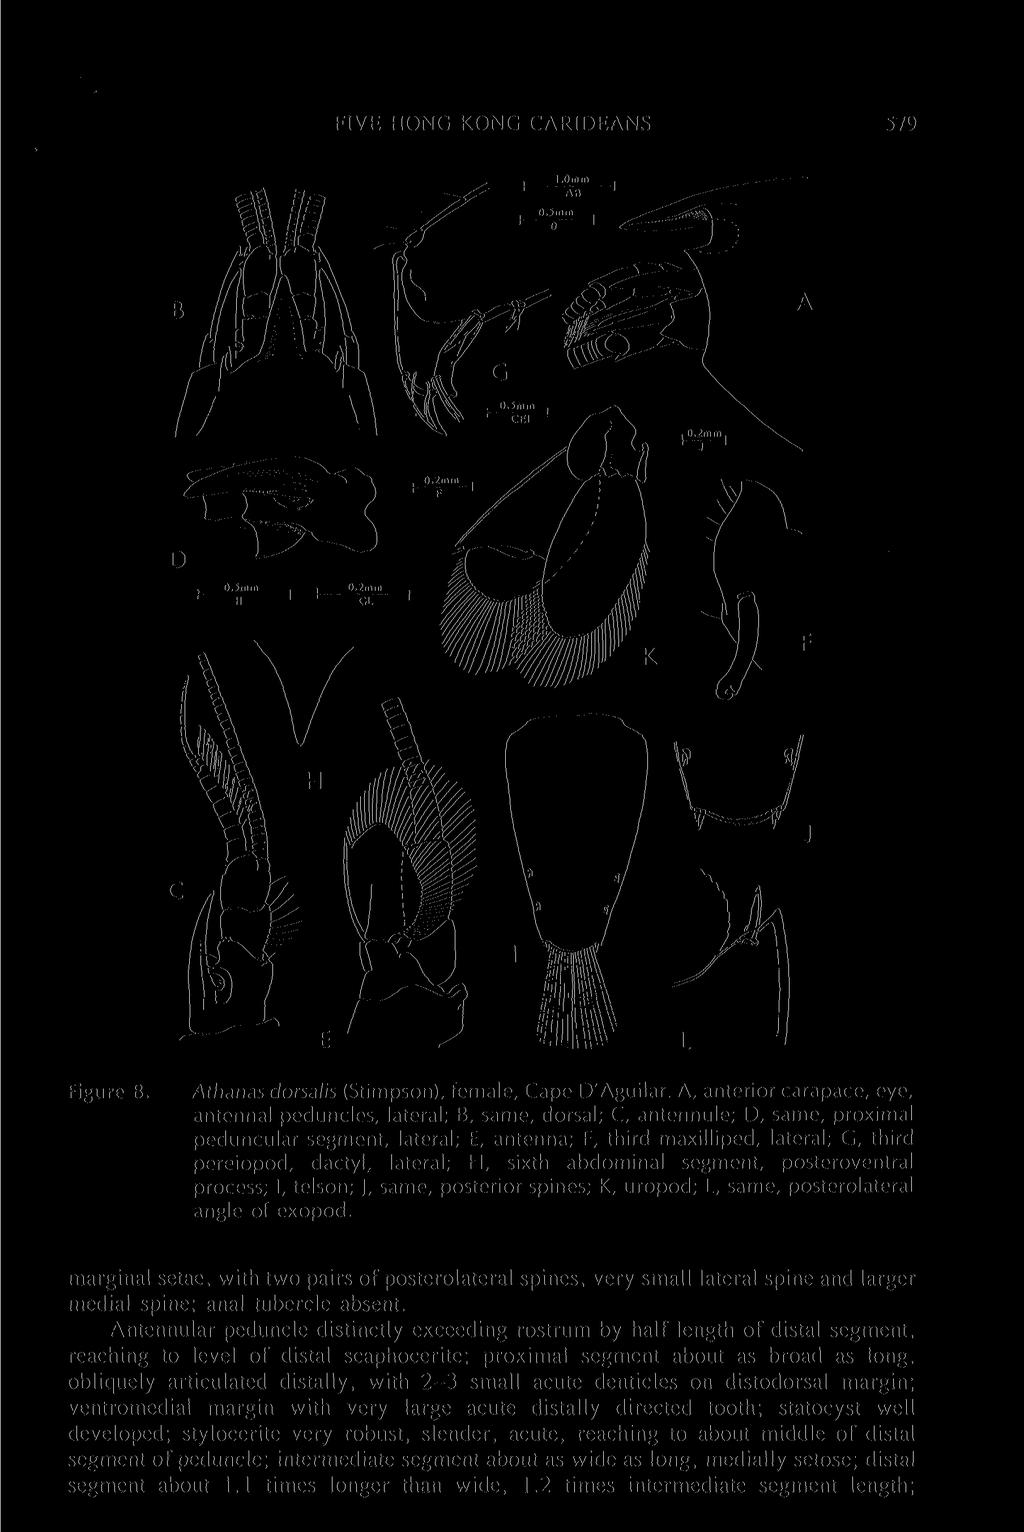 FIVE HONG KONG CARIDEANS 579 Figure 8. Athanas dorsalis (Stimpson), female, Cape D'Aguilar.